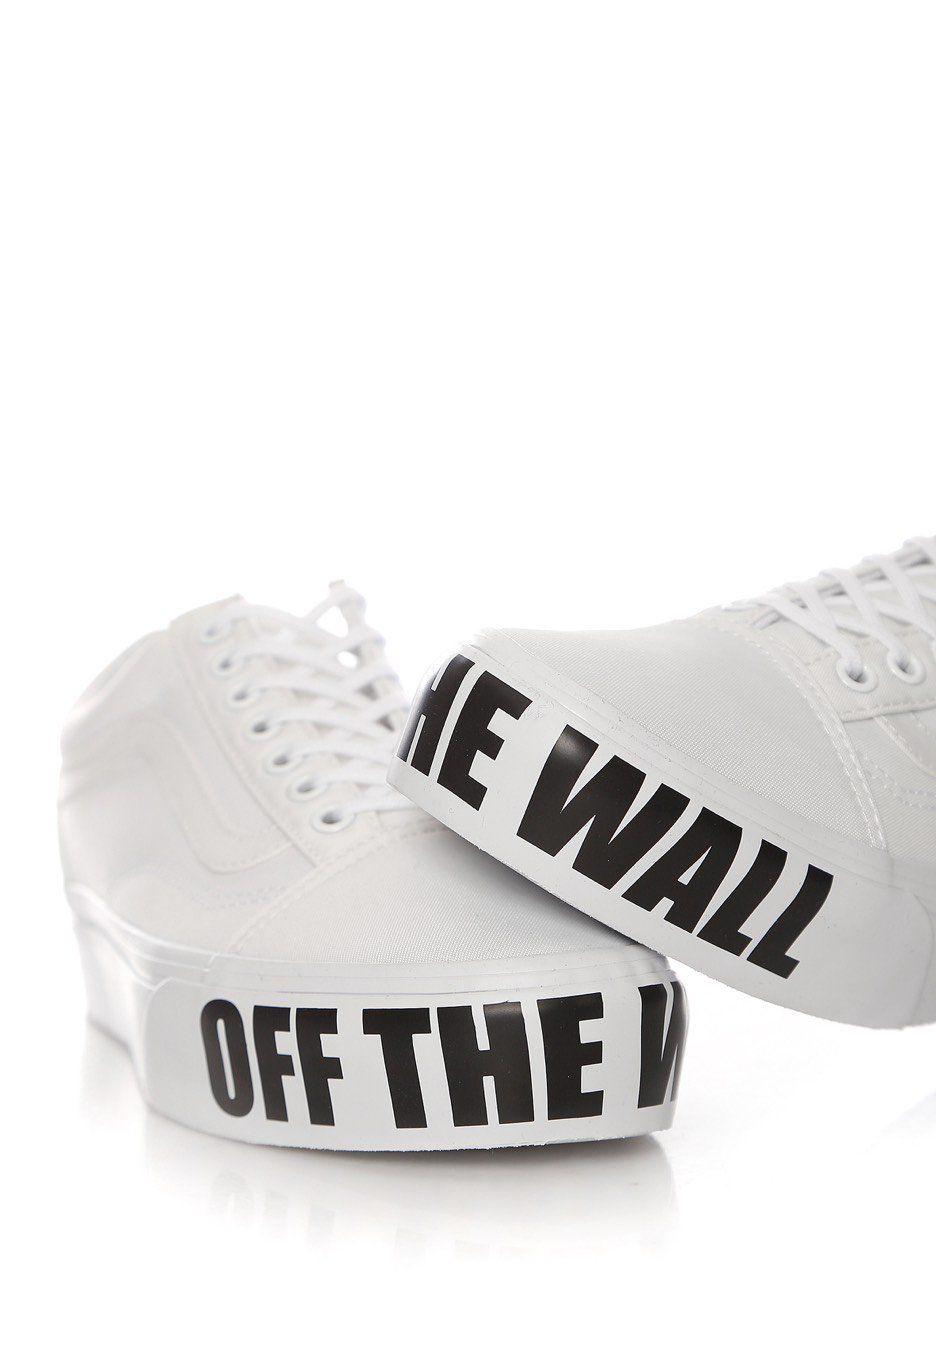 Off the Wall Vans Shoes Logo - Vans Skool Platform Off The Wall Shoes.com UK